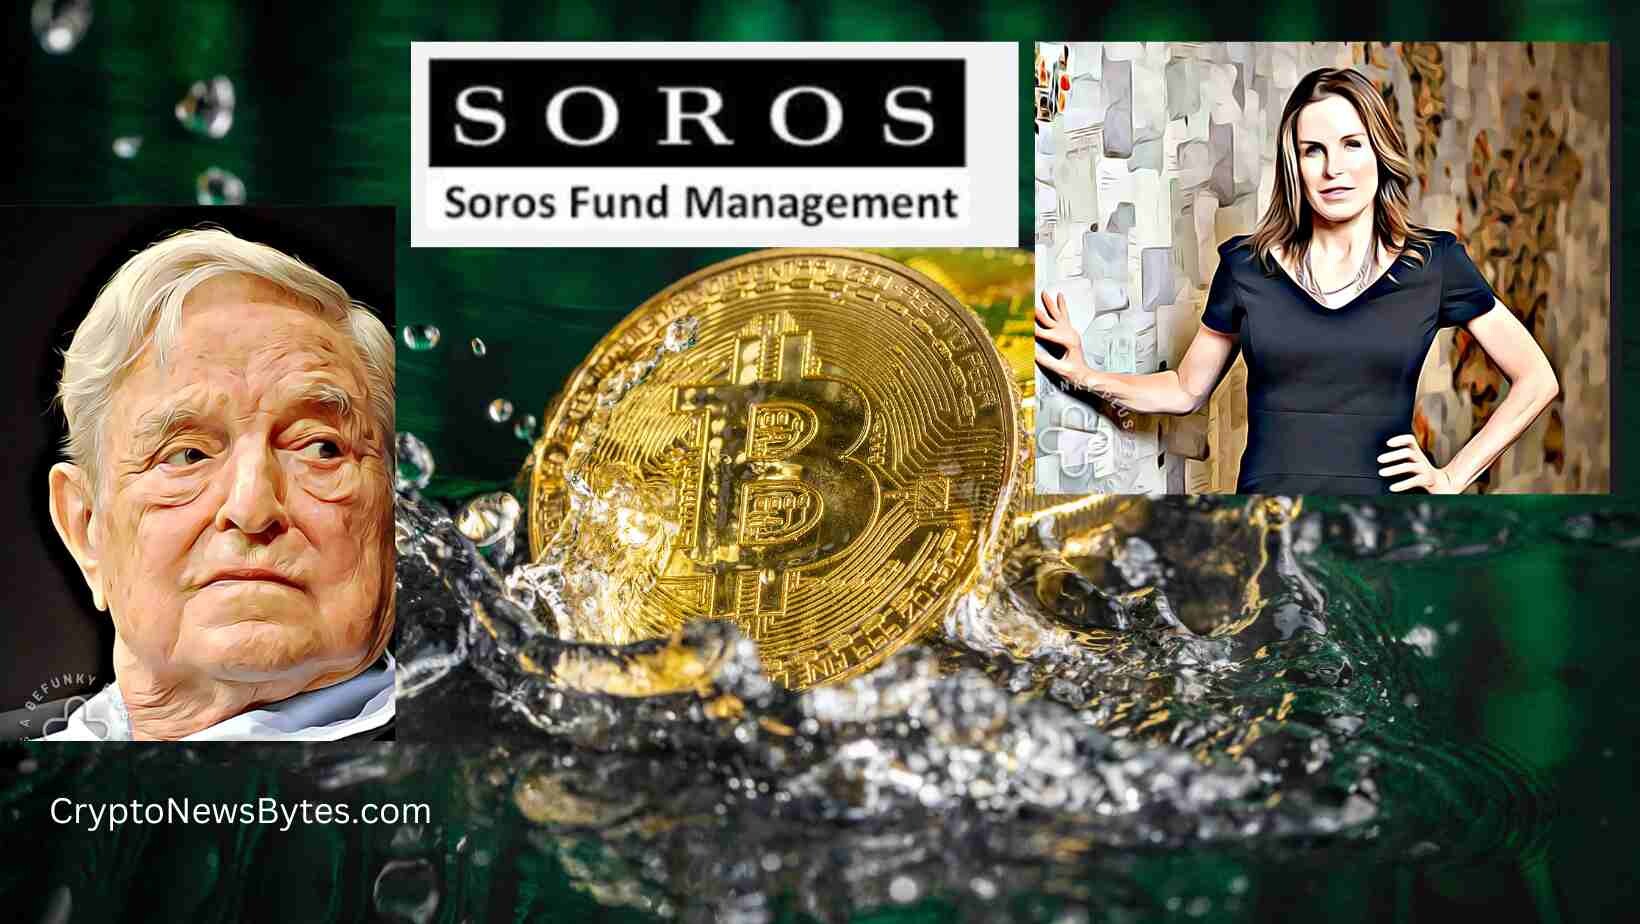 CRYPTONEWSBYTES.COM SorosFundManagement-bitcoin 'Crypto is here to stay' -  Soros Fund Management CEO  